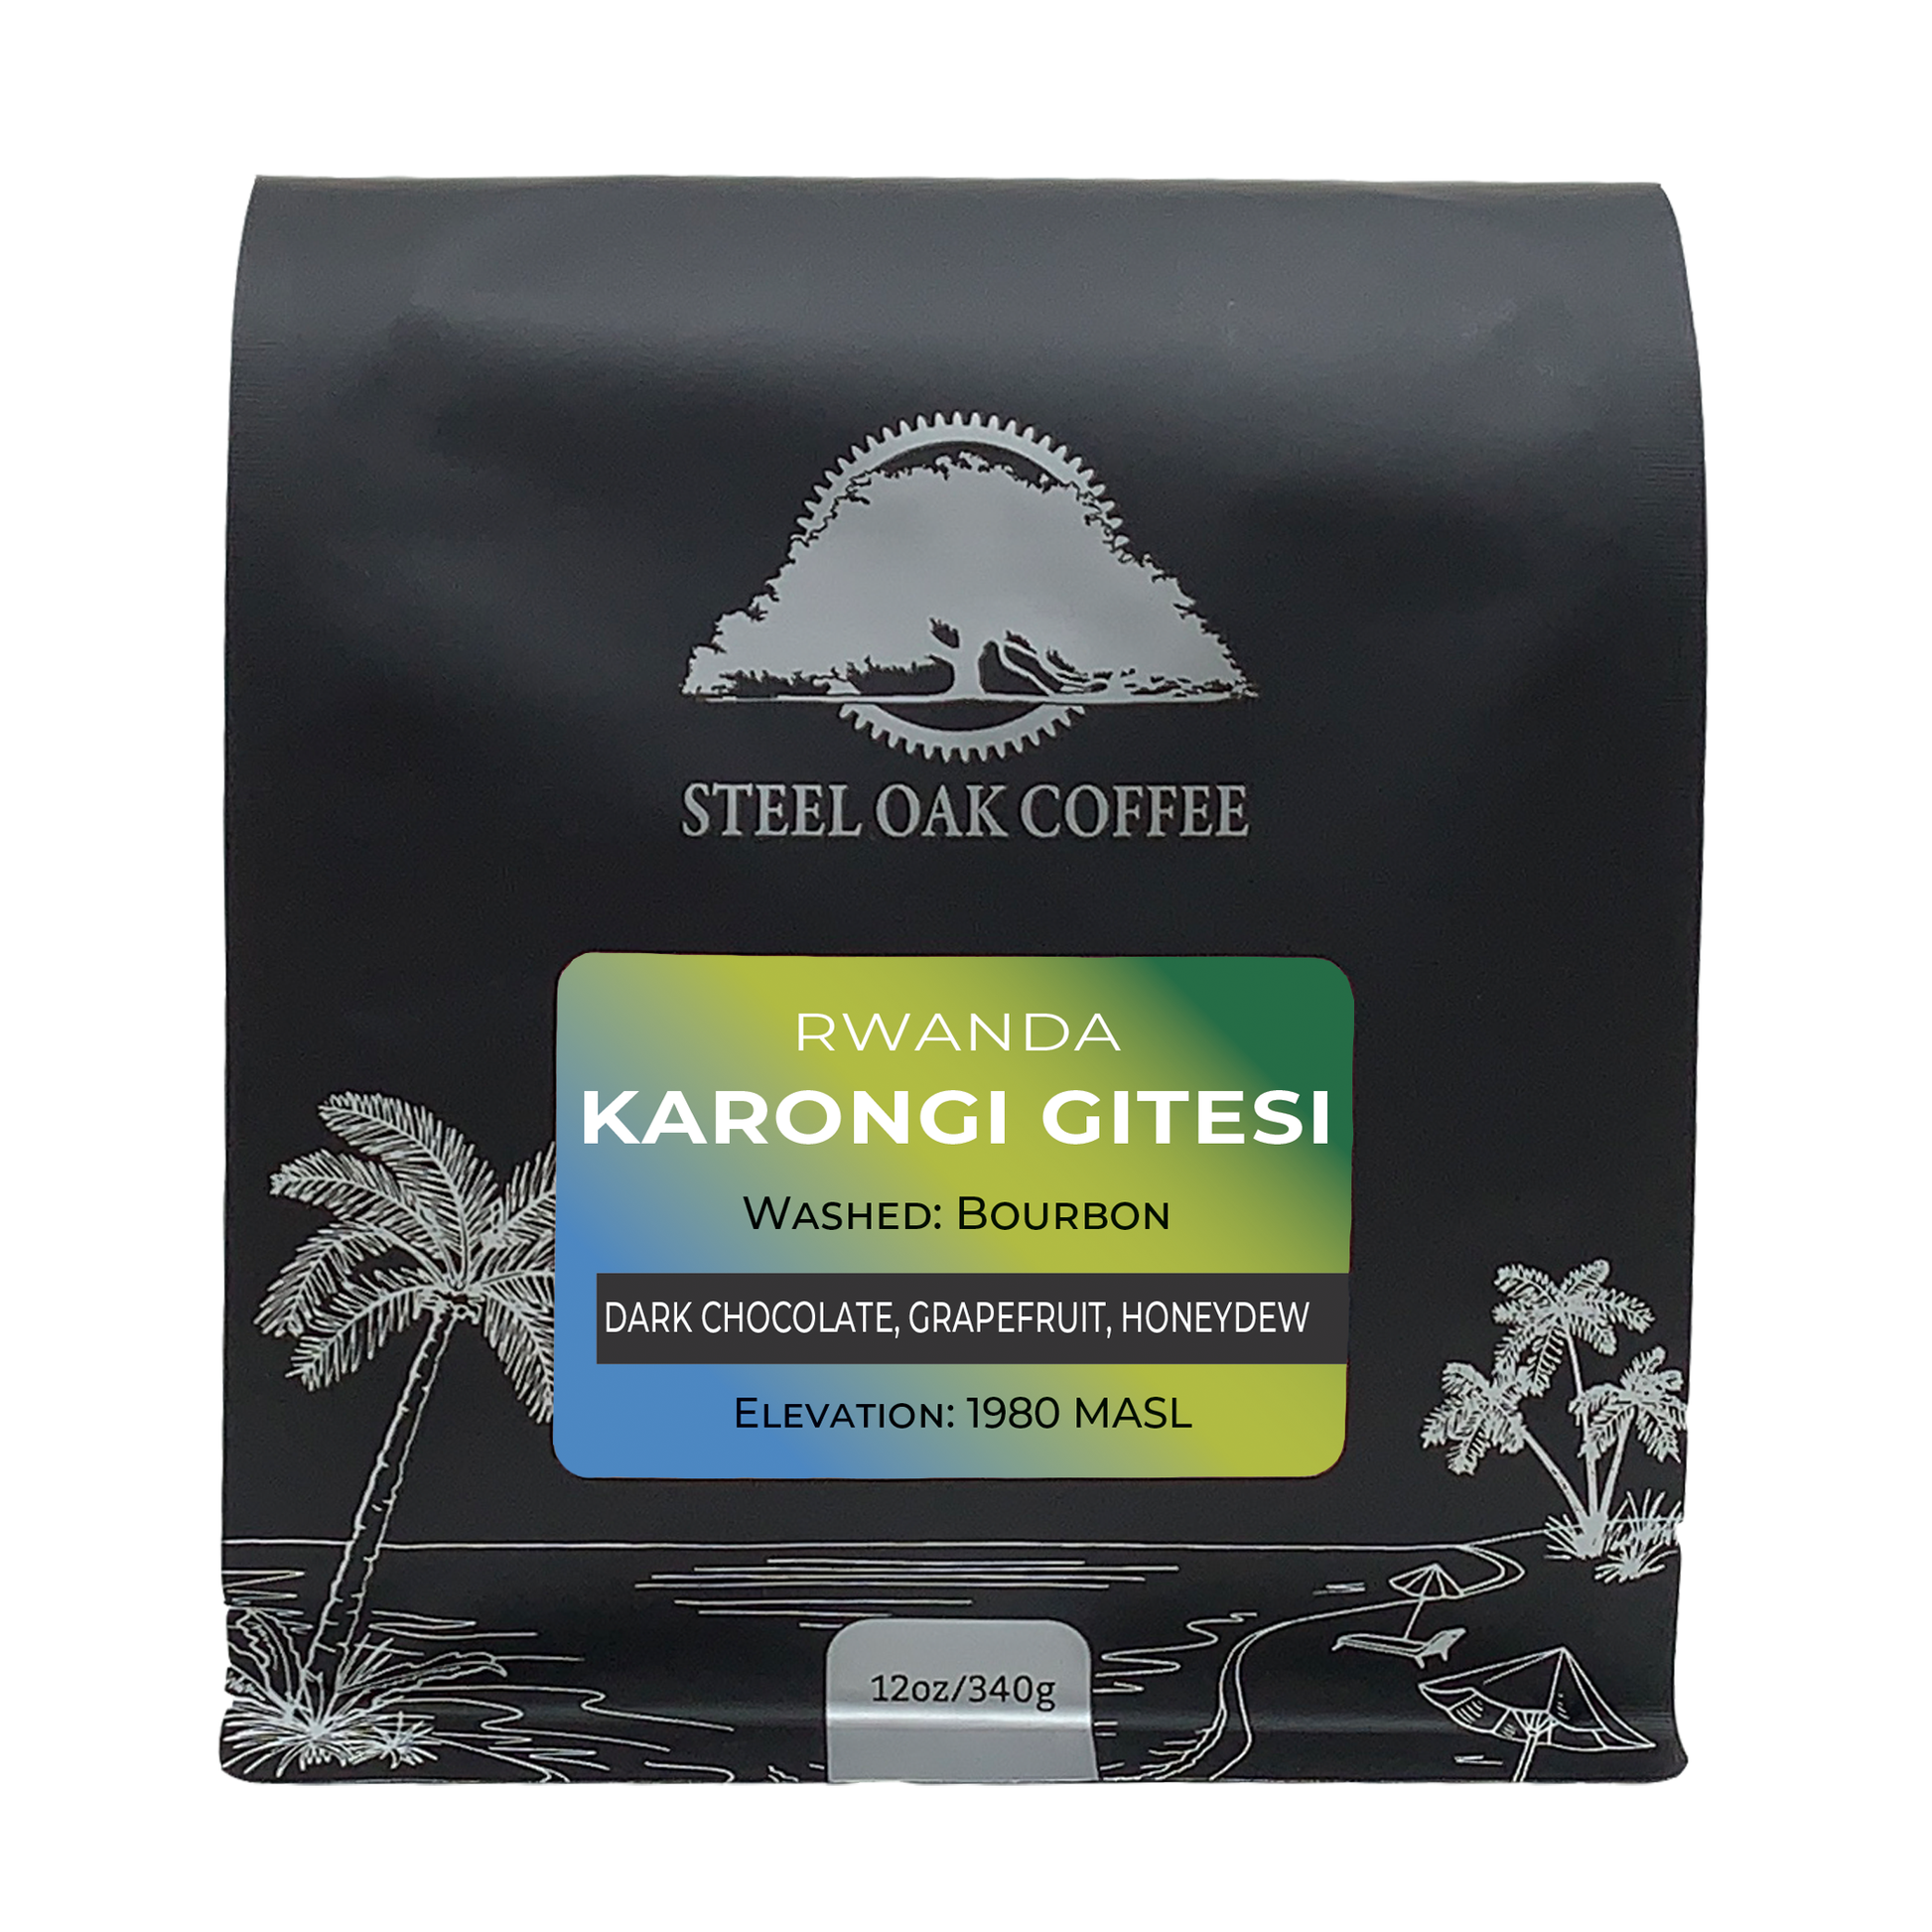 Rwanda - Karongi Gitesi - Steel Oak Coffee